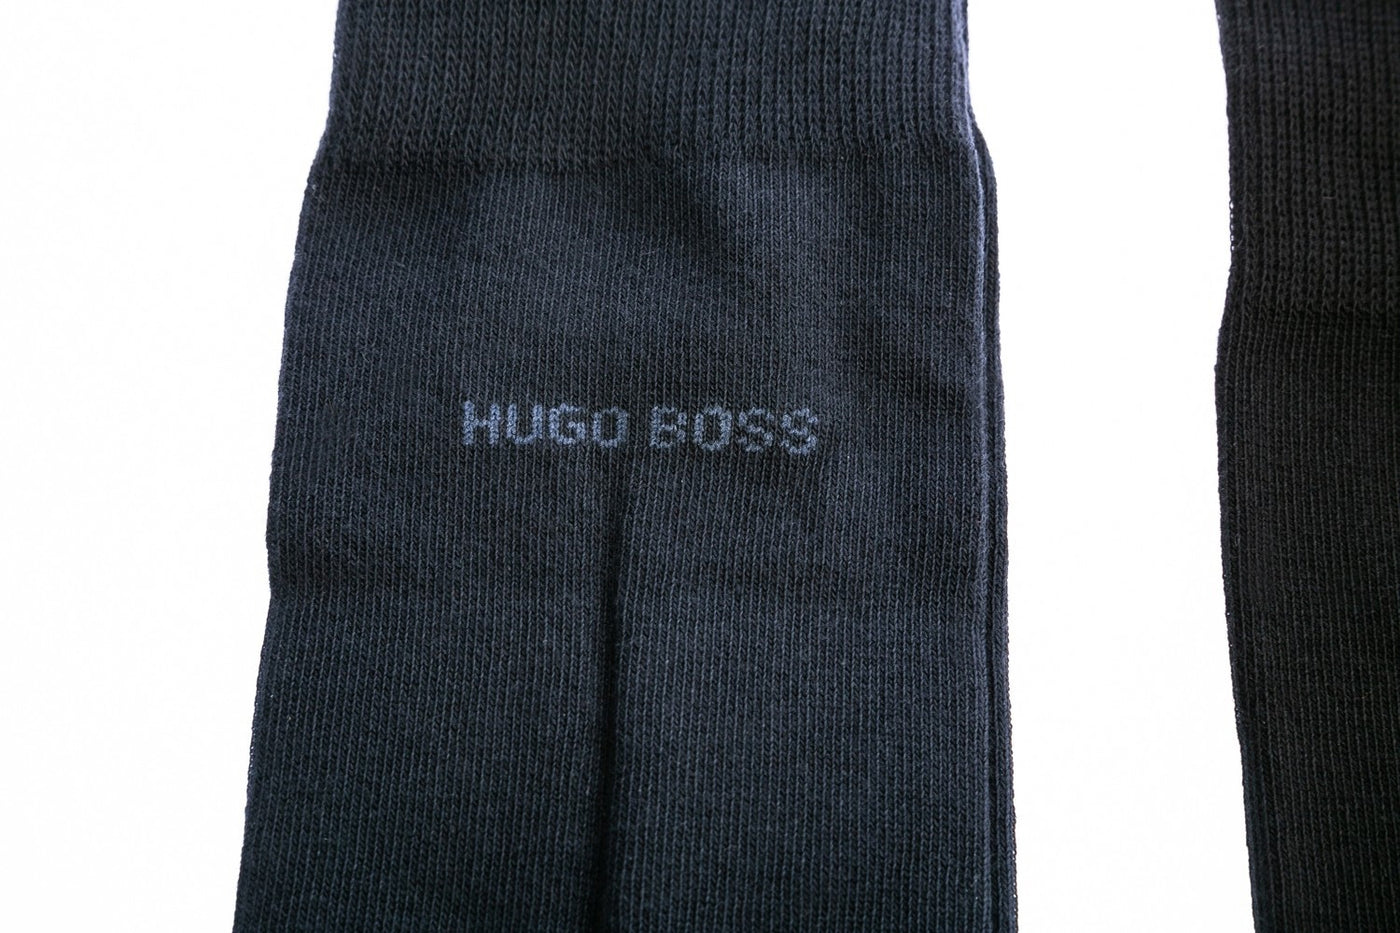 BOSS 3 Pack RS Uni Sock in Black, Grey & Navy